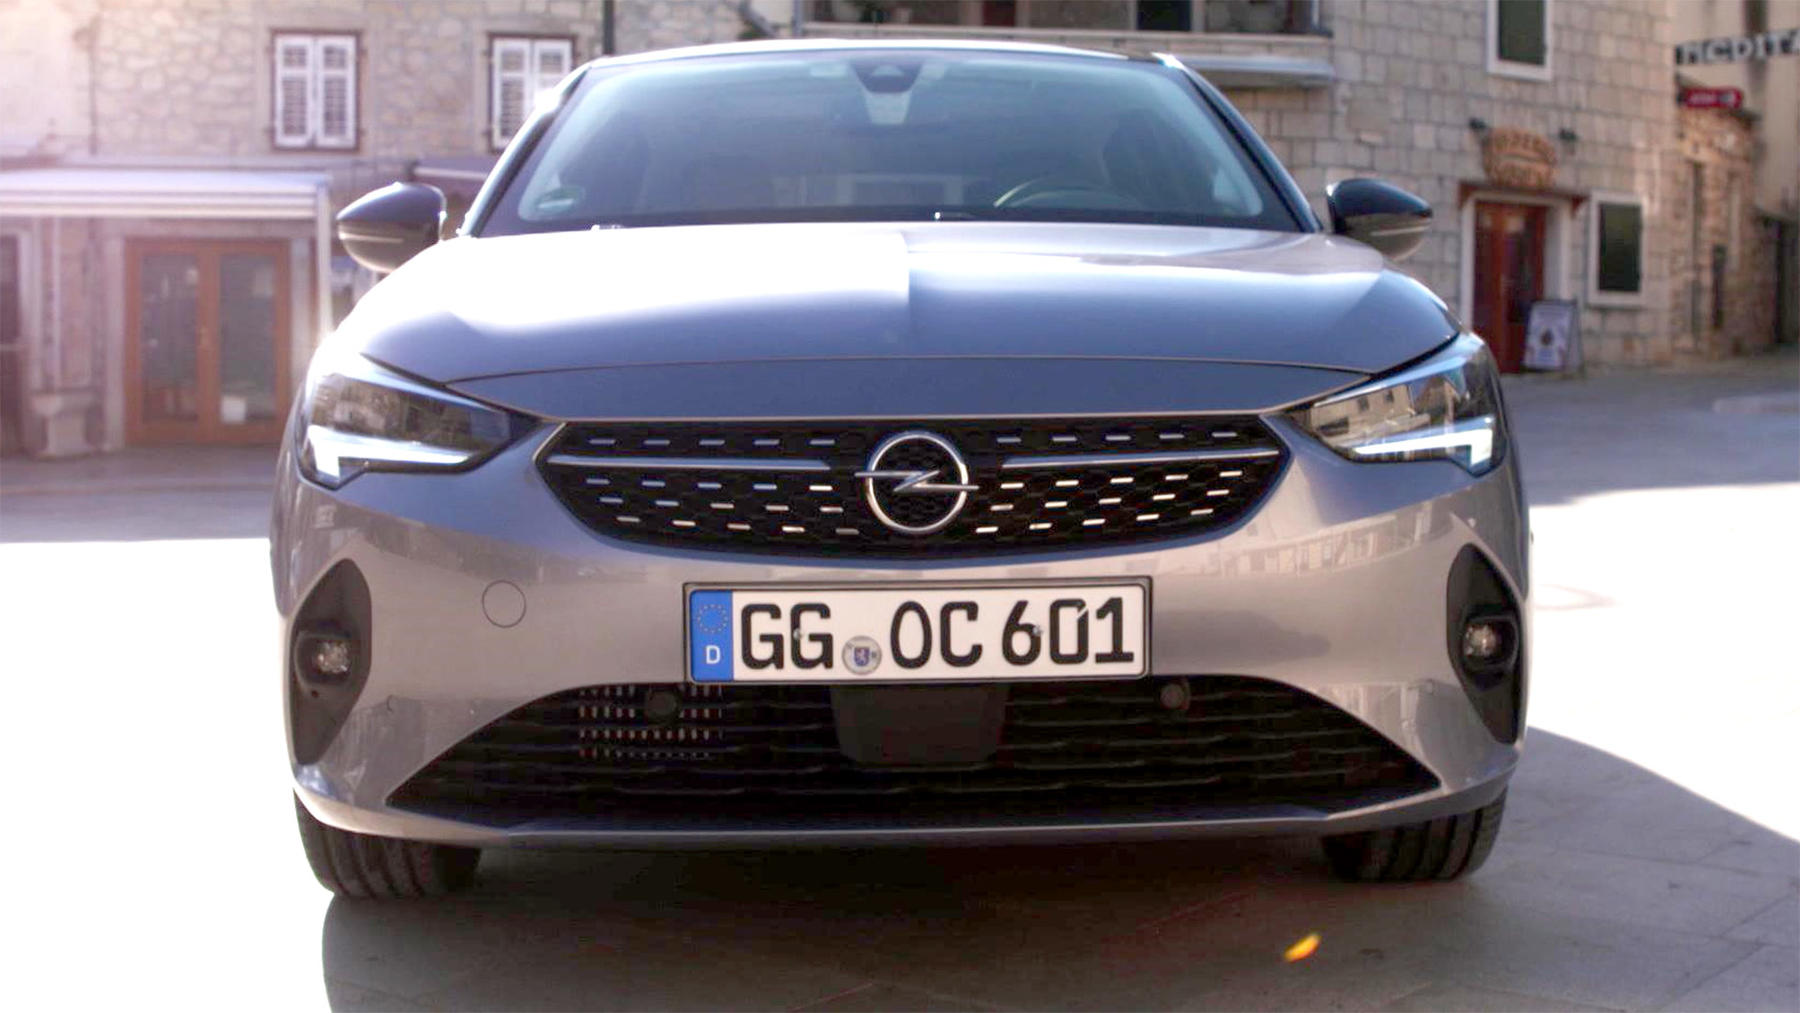 Thema heute u.a.: Fahrbericht Opel Corsa mit Andi | Folge 50